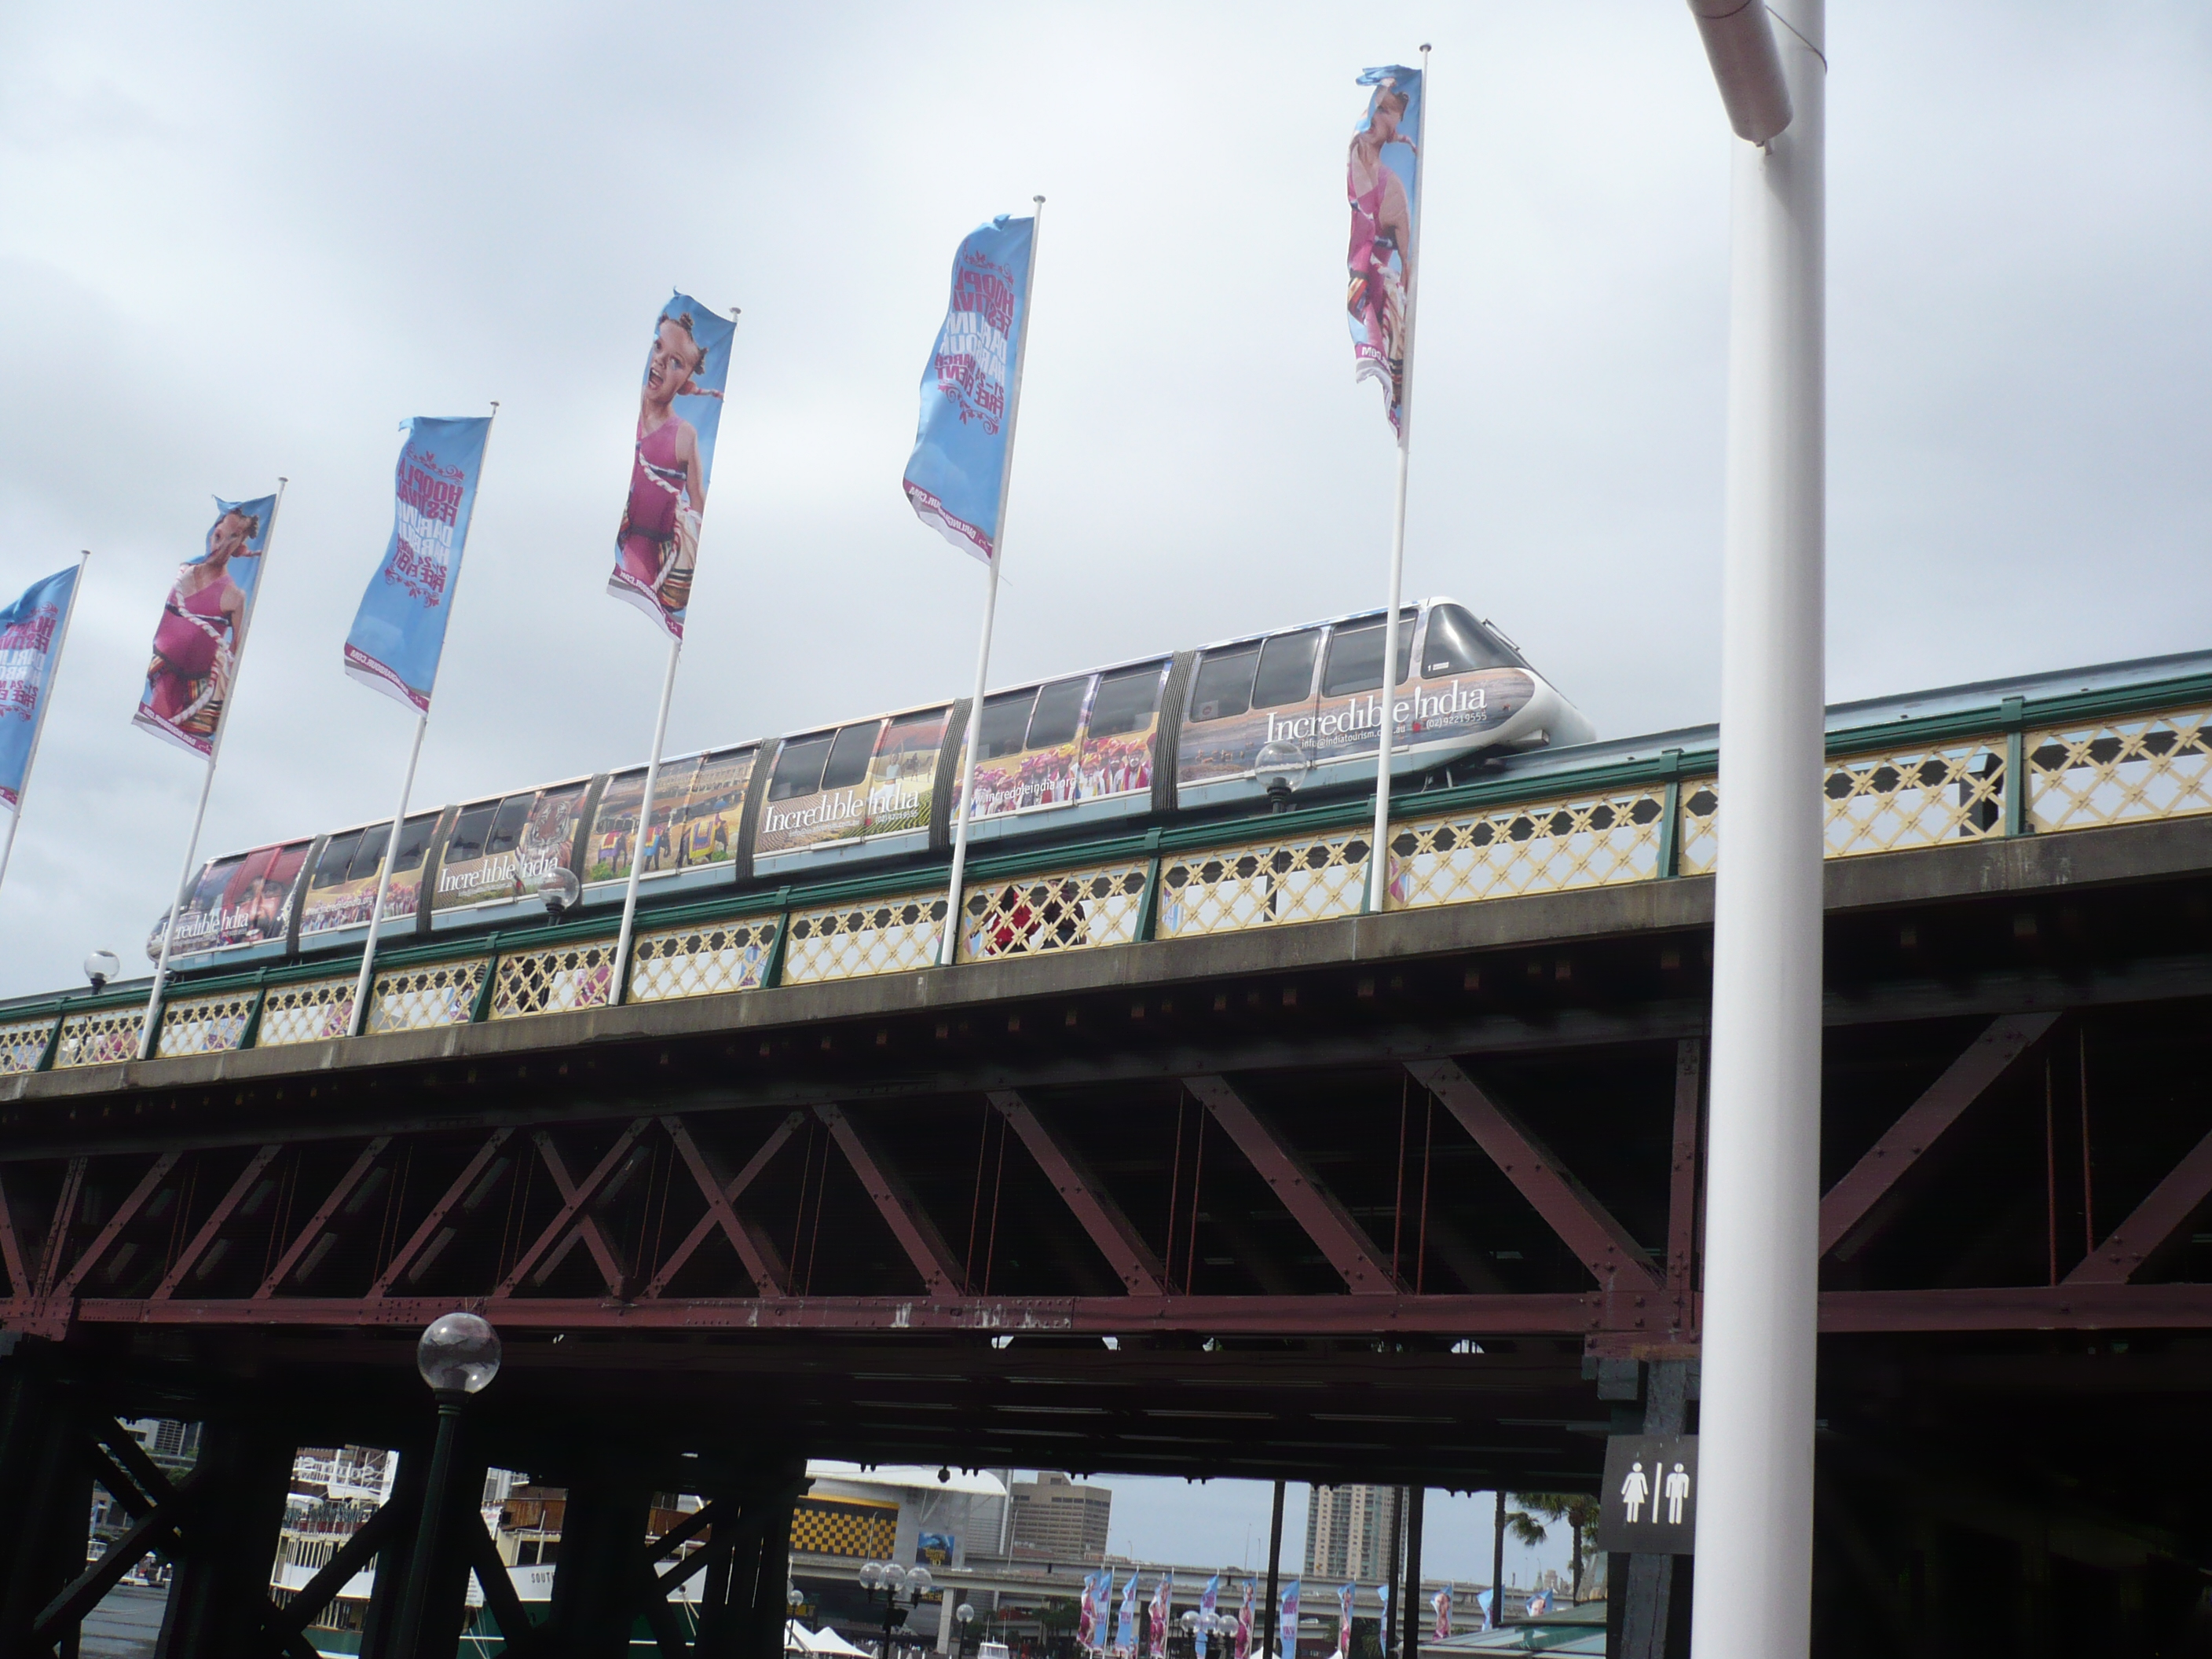 Sydney monorail photo